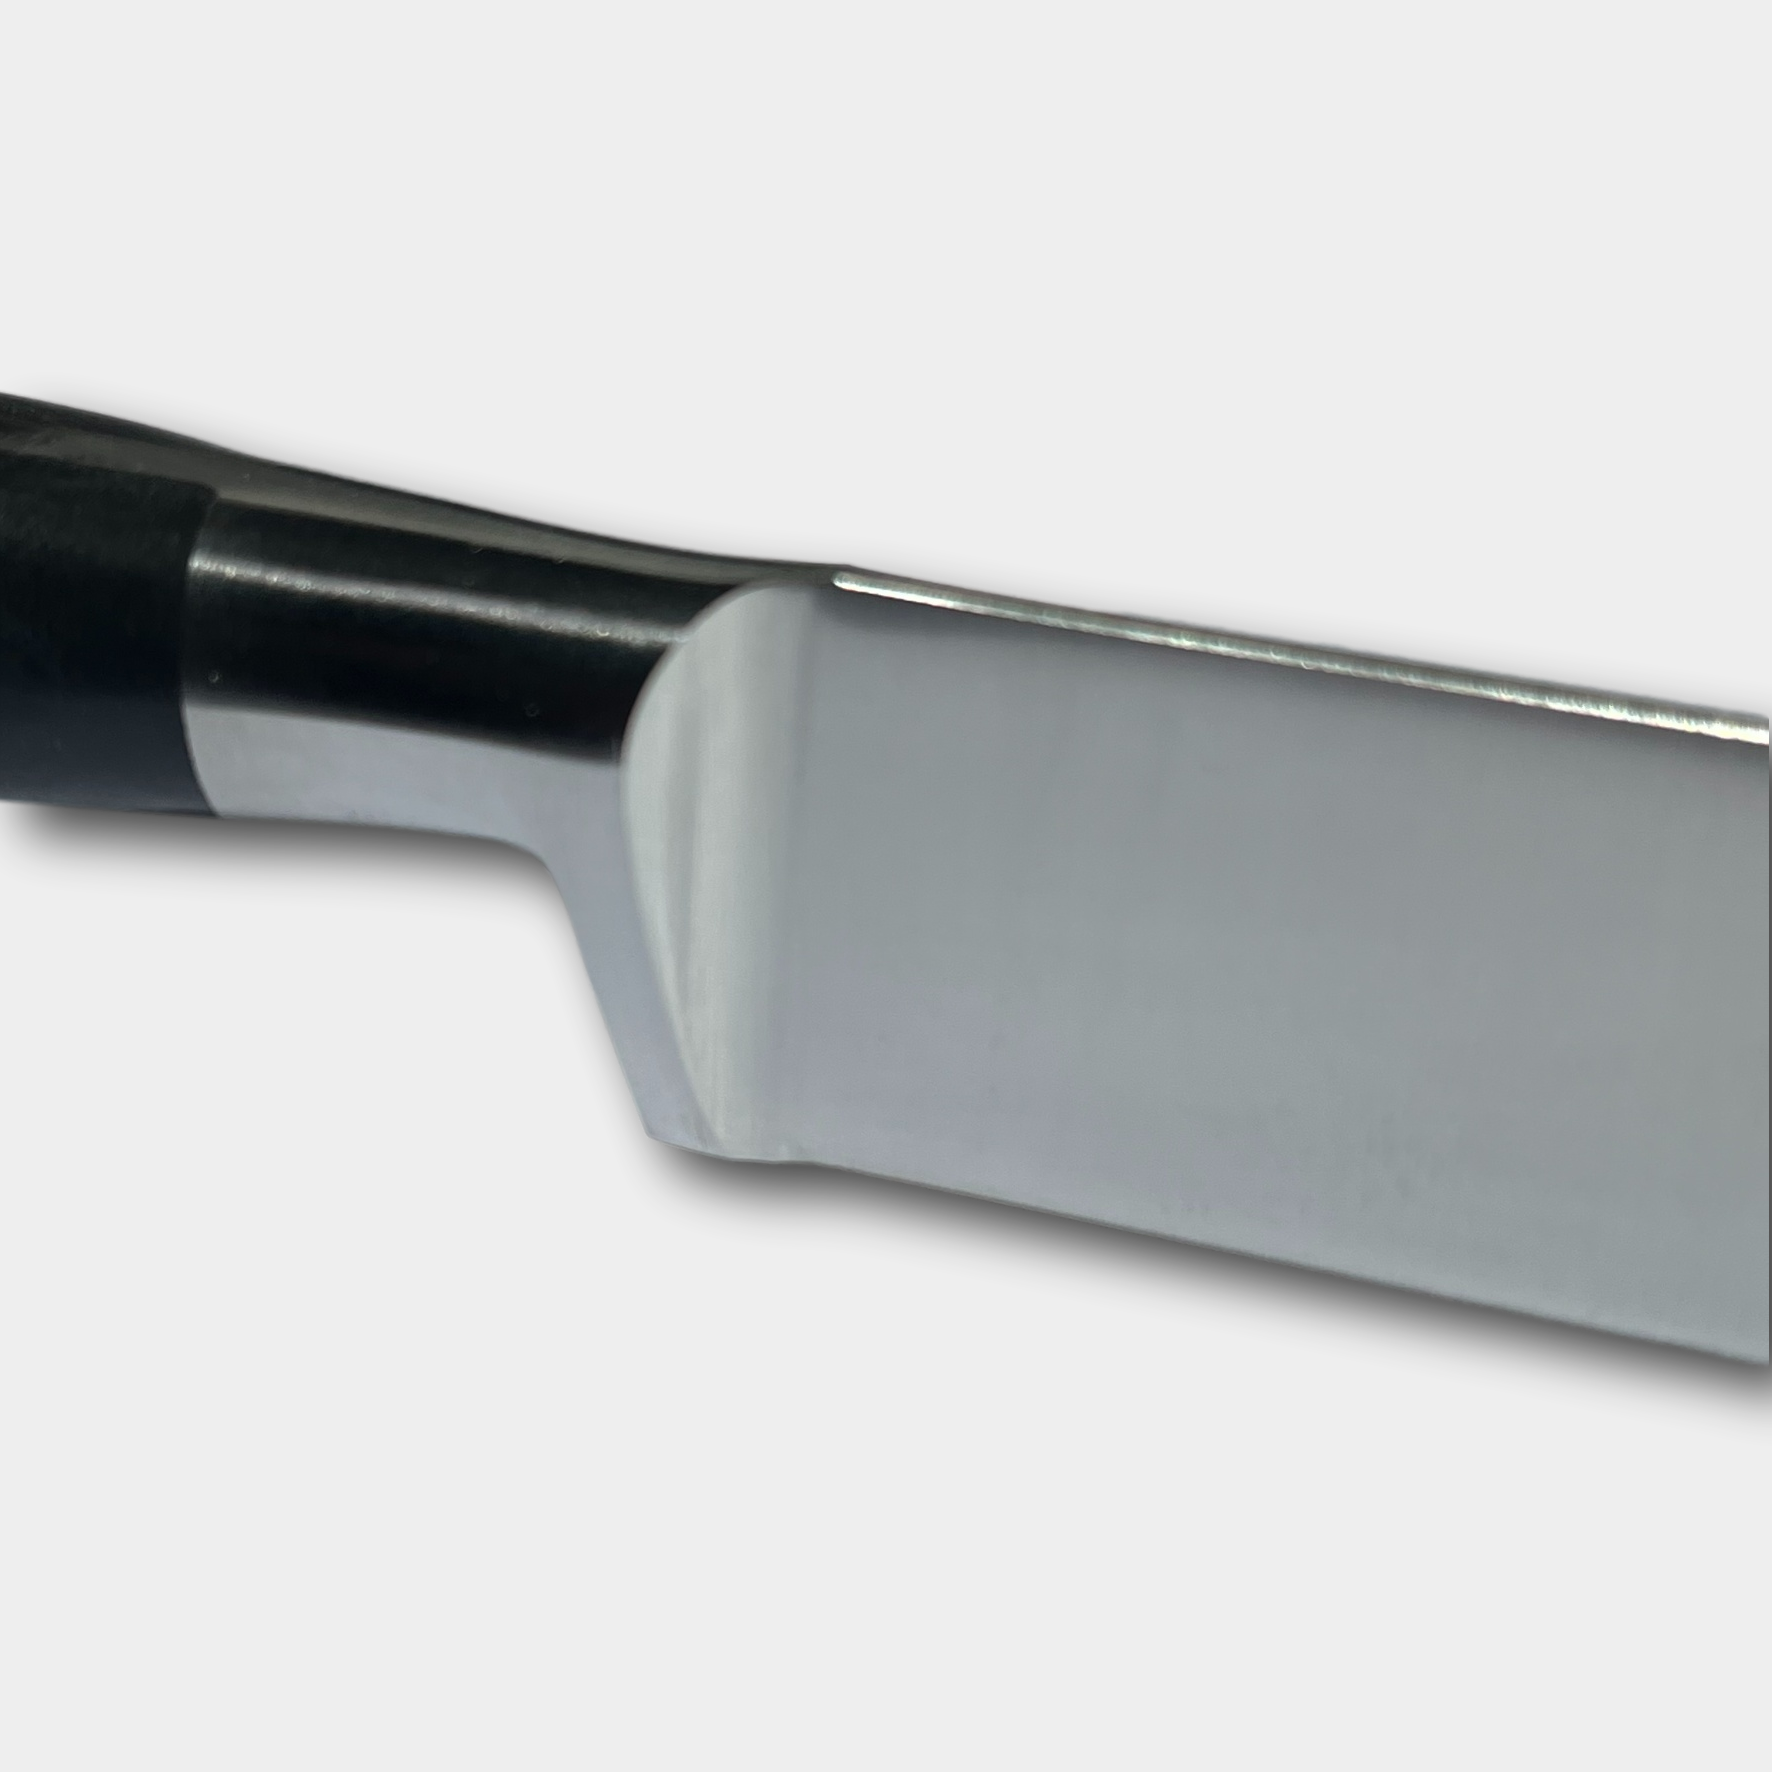 Lion Sabtier Ideal Steel 15cm Chef Knife